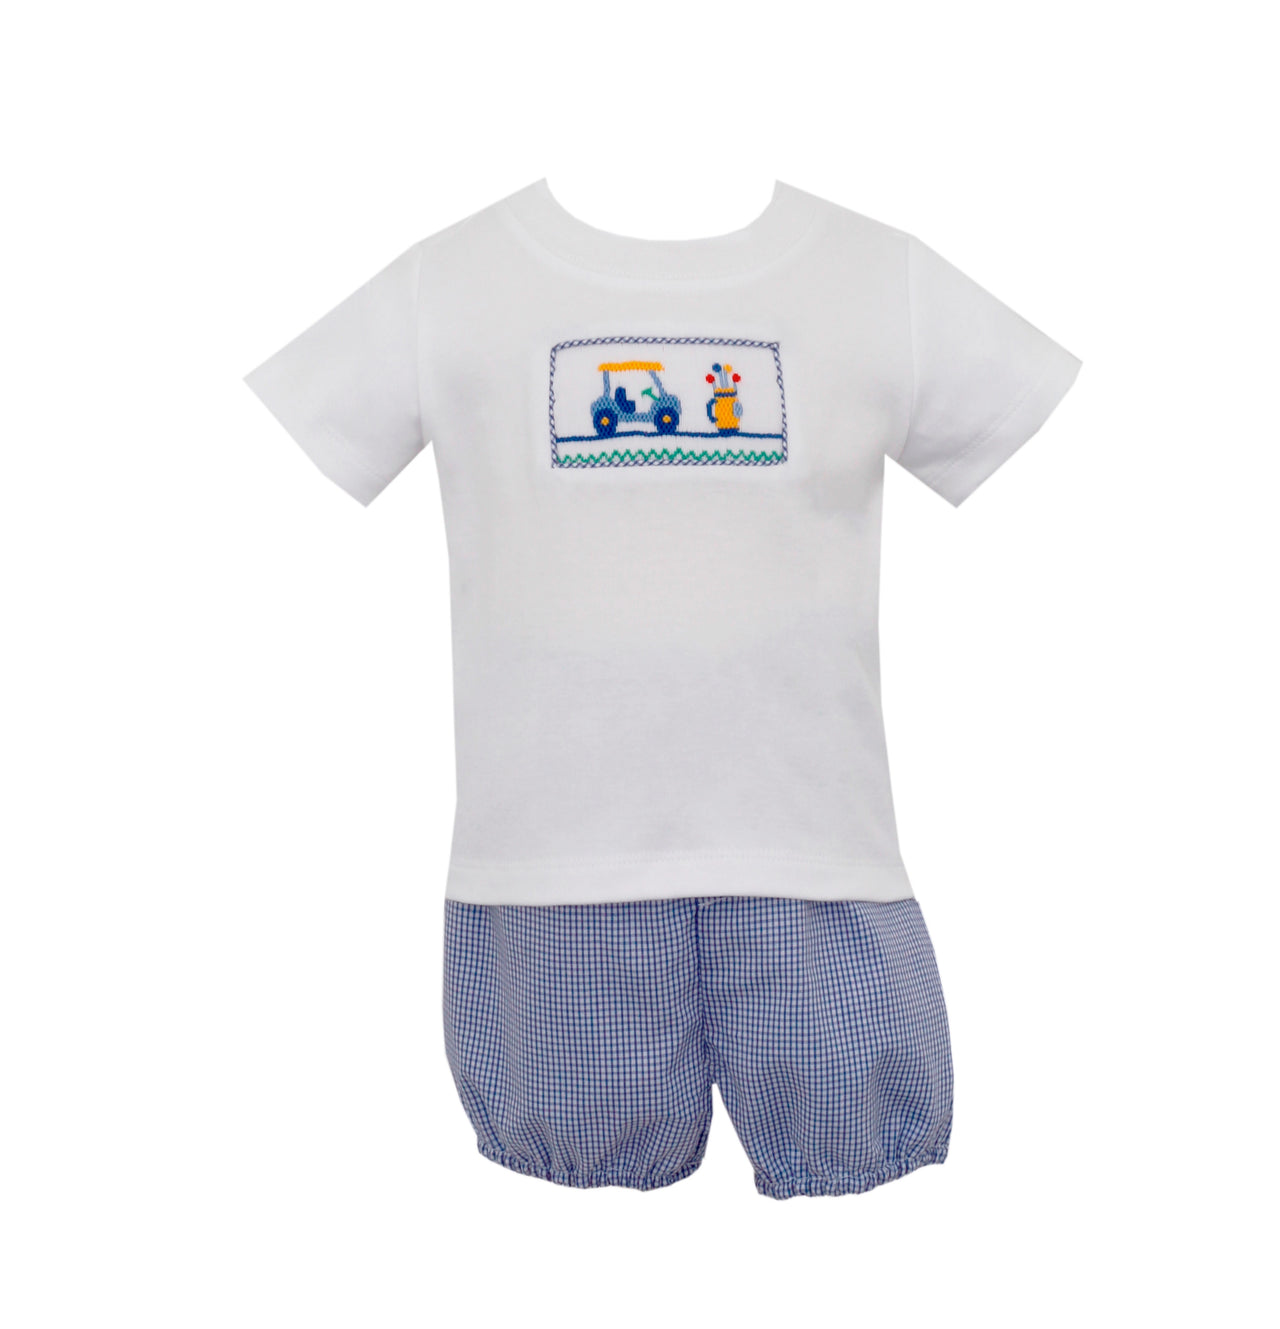 Petit Bebe Golf Boy's Diaper Set S/S White T-shirt W/Navy Blue Check Diaper 127M-MF23 5007